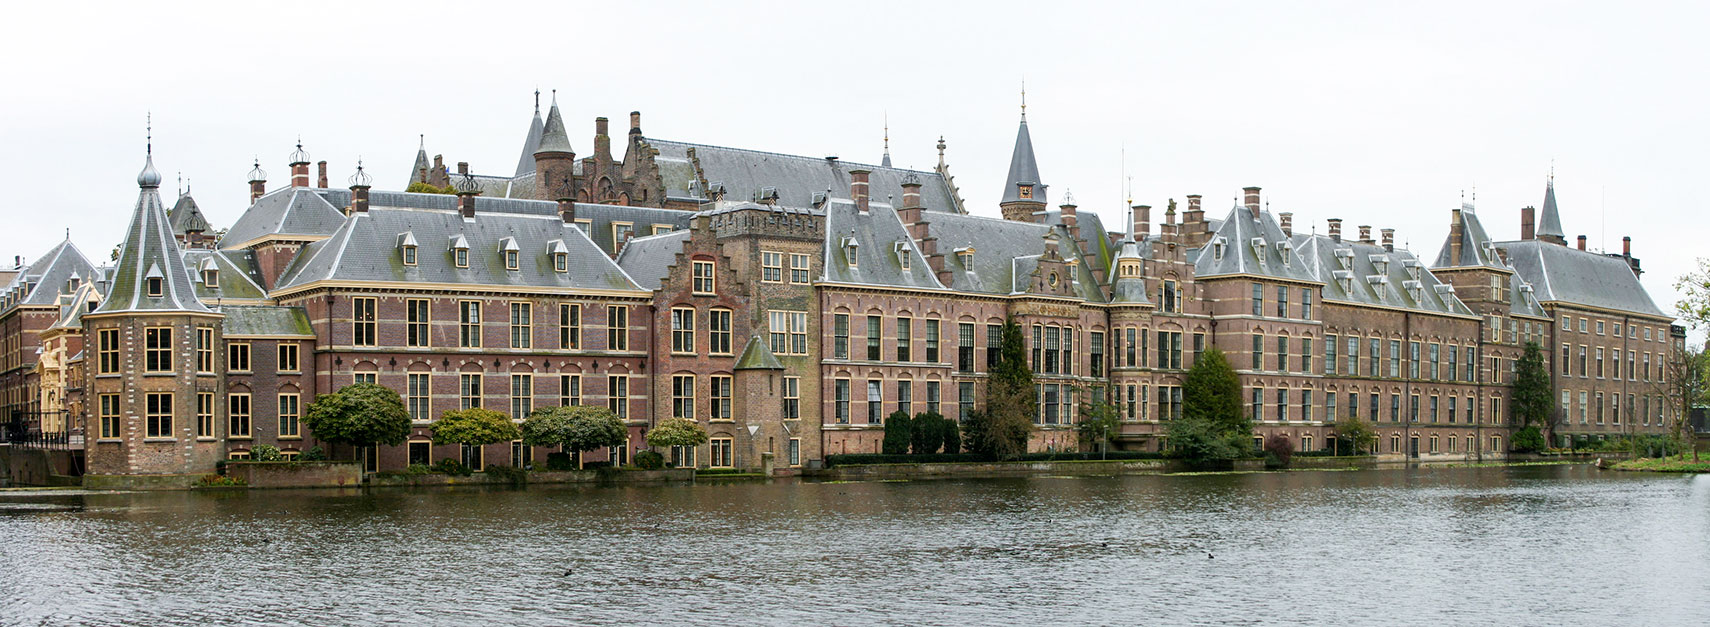 Binnenhof at the Hofvijver lake in The Hague